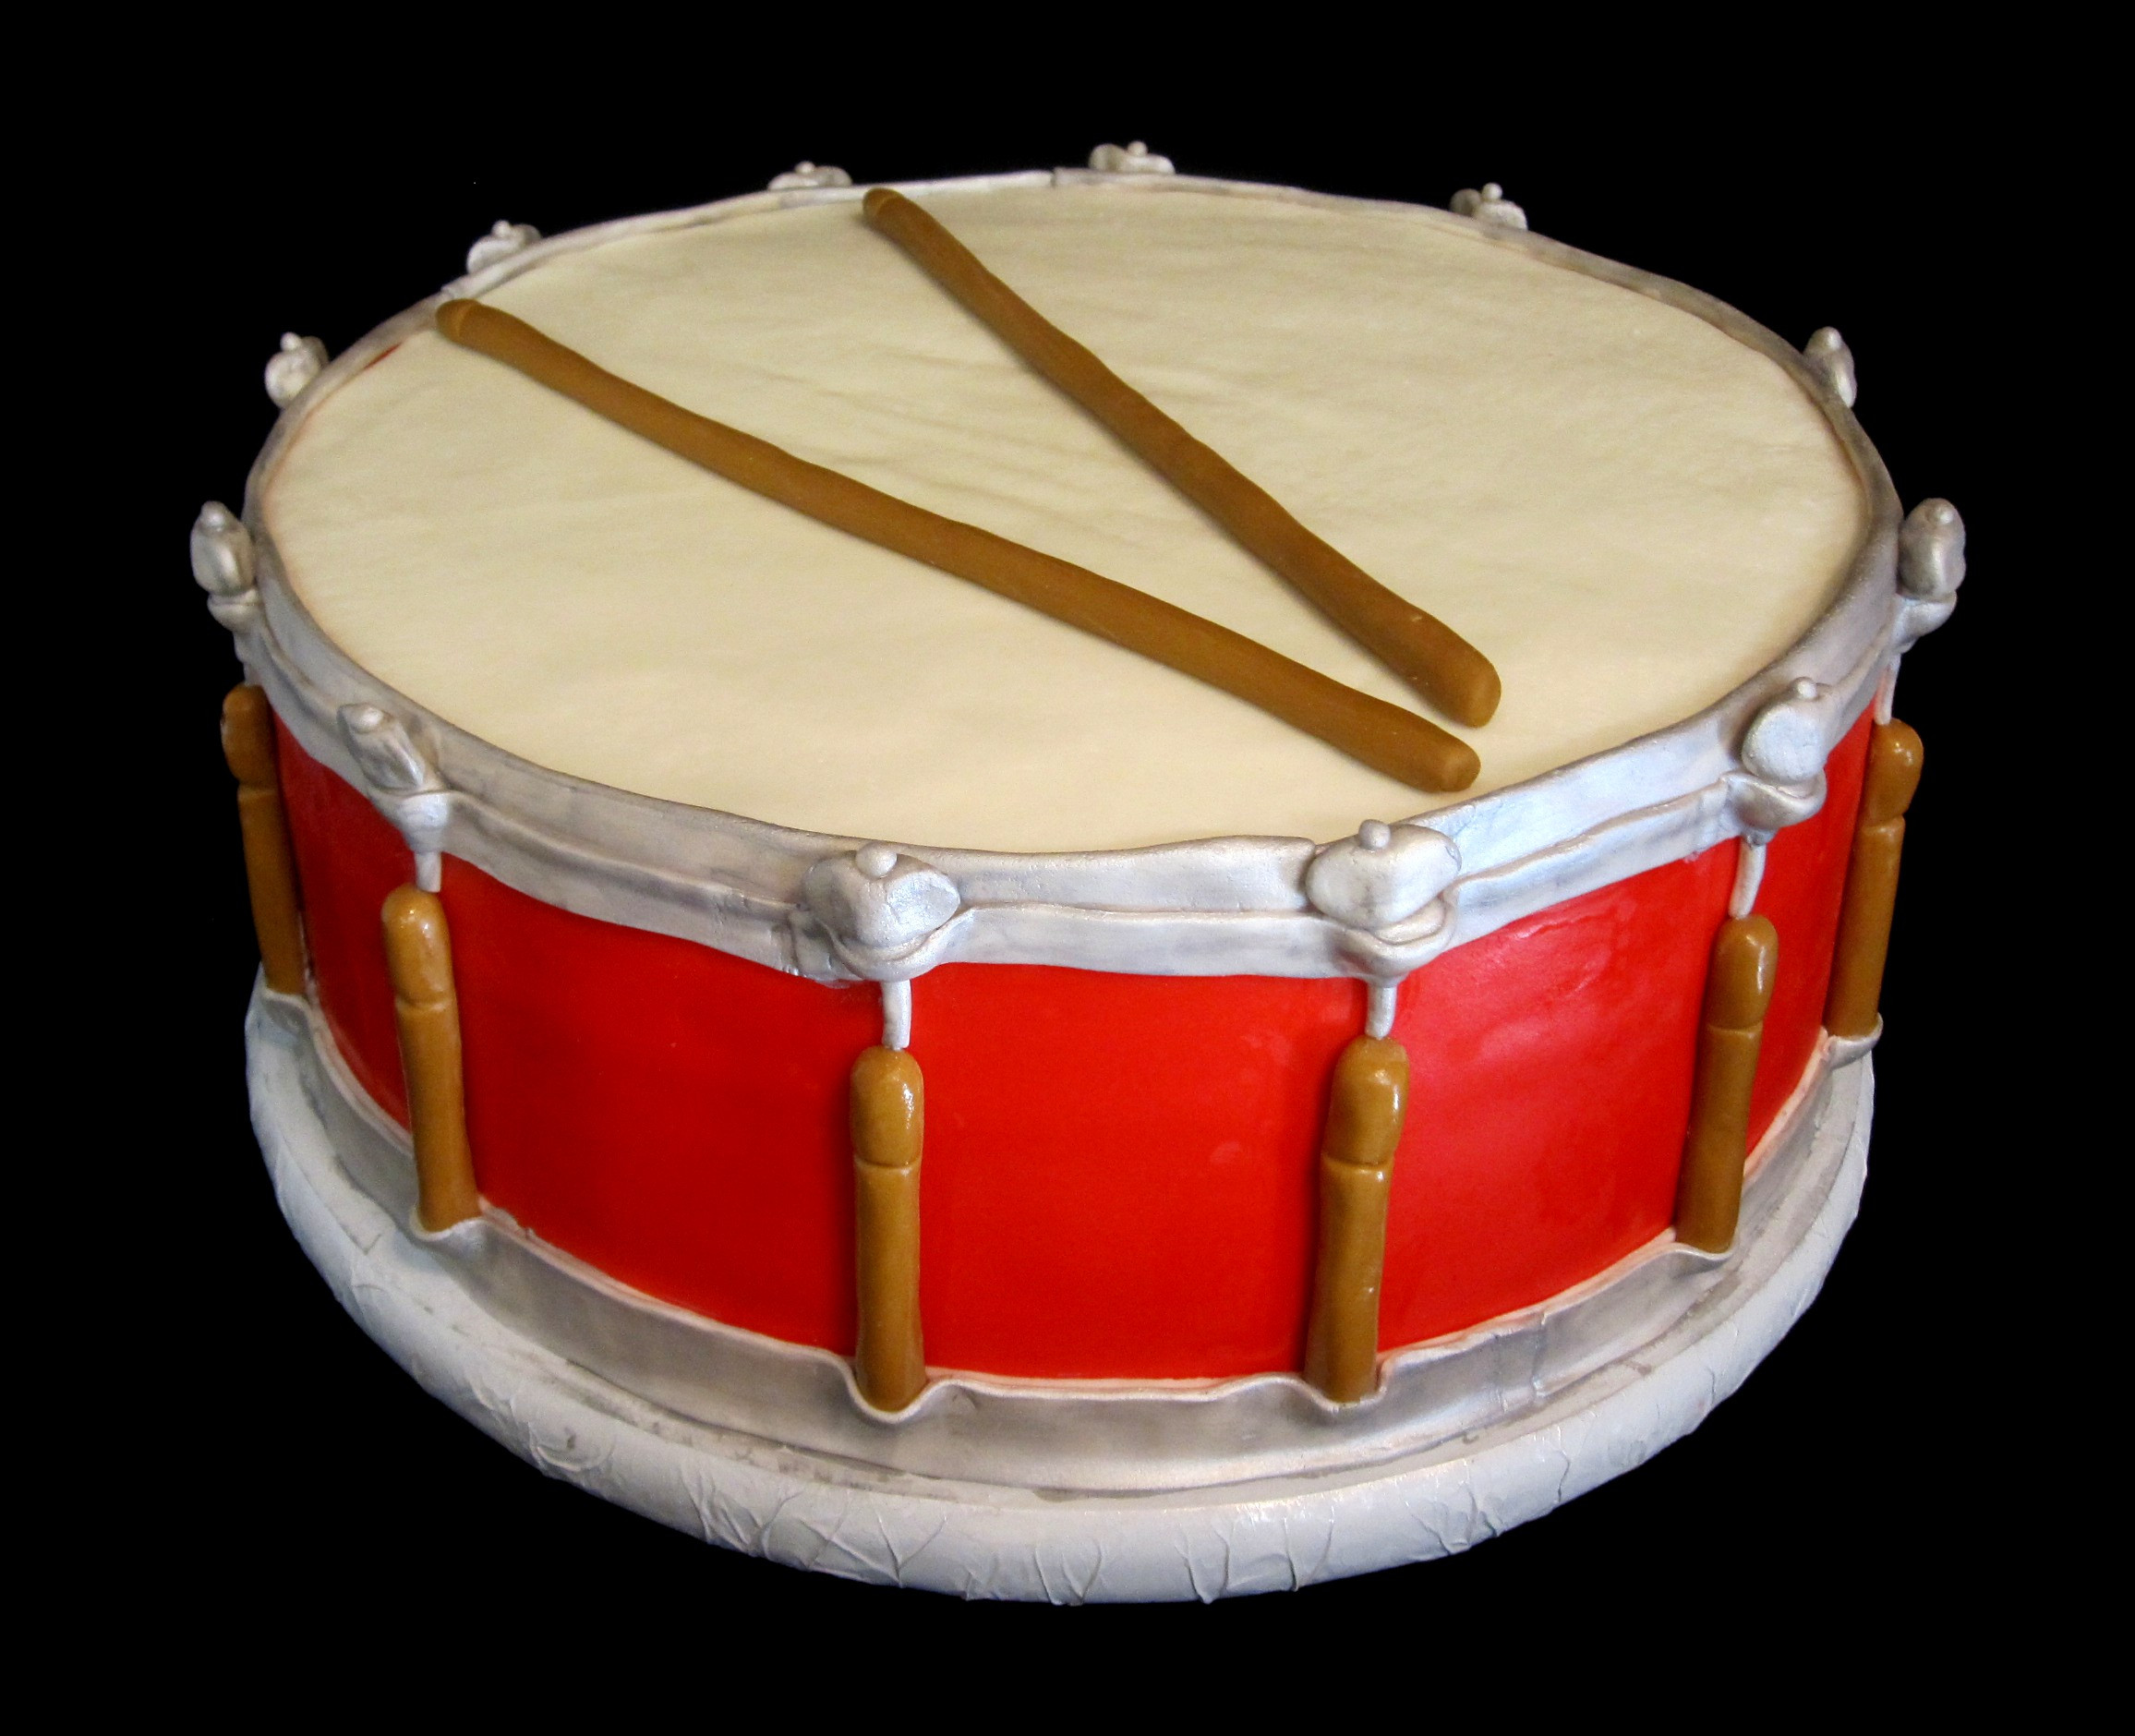 Drum Birthday Cake
 birthday cake